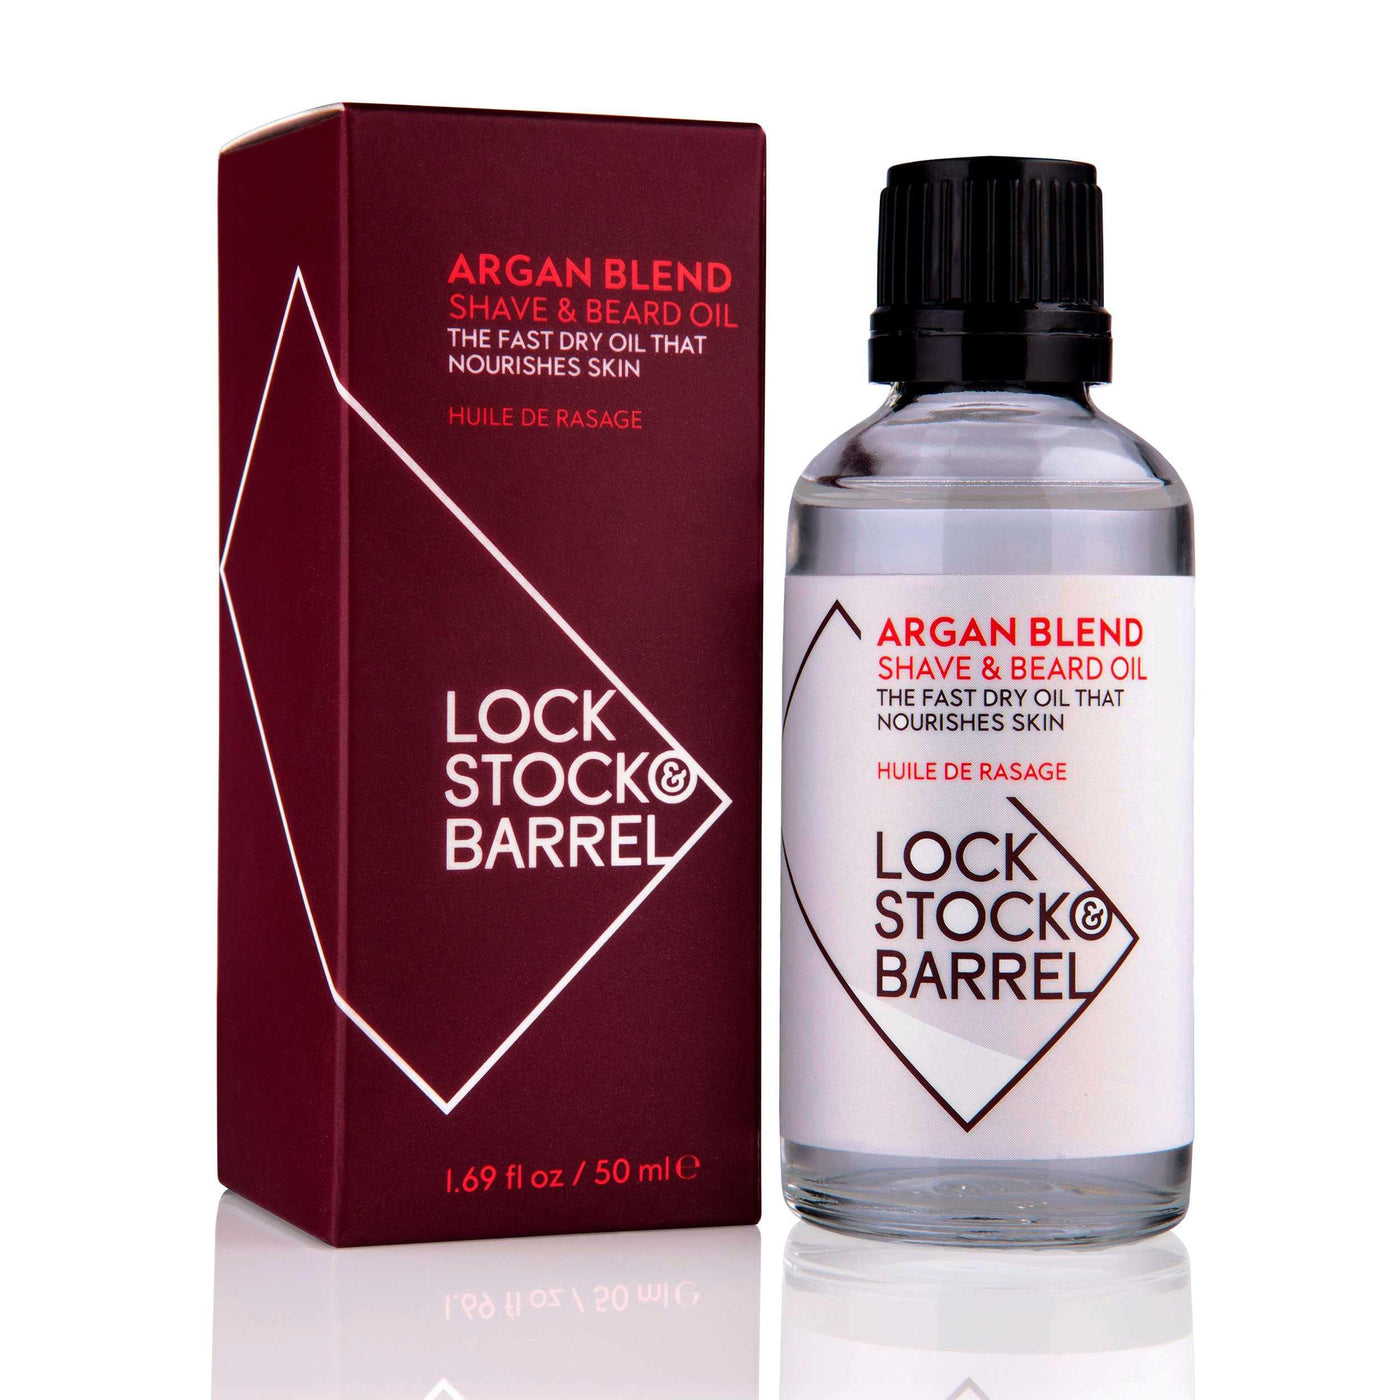 Lock Stock & Barrel - Argan Blend Shave & Beard Oil - 50ml Lock Stock & Barrel Boutique Deauville